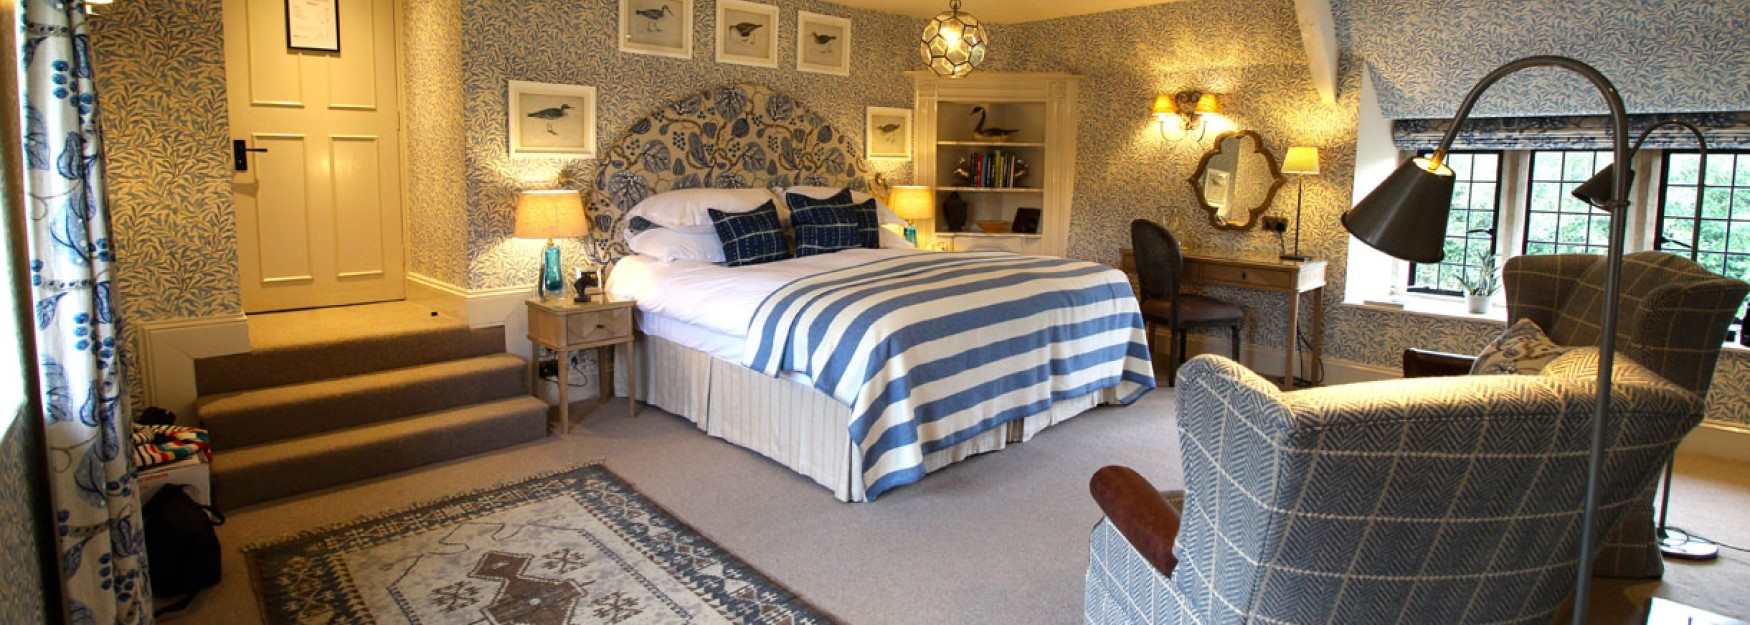 A bedroom at The Lamb Inn in Burford